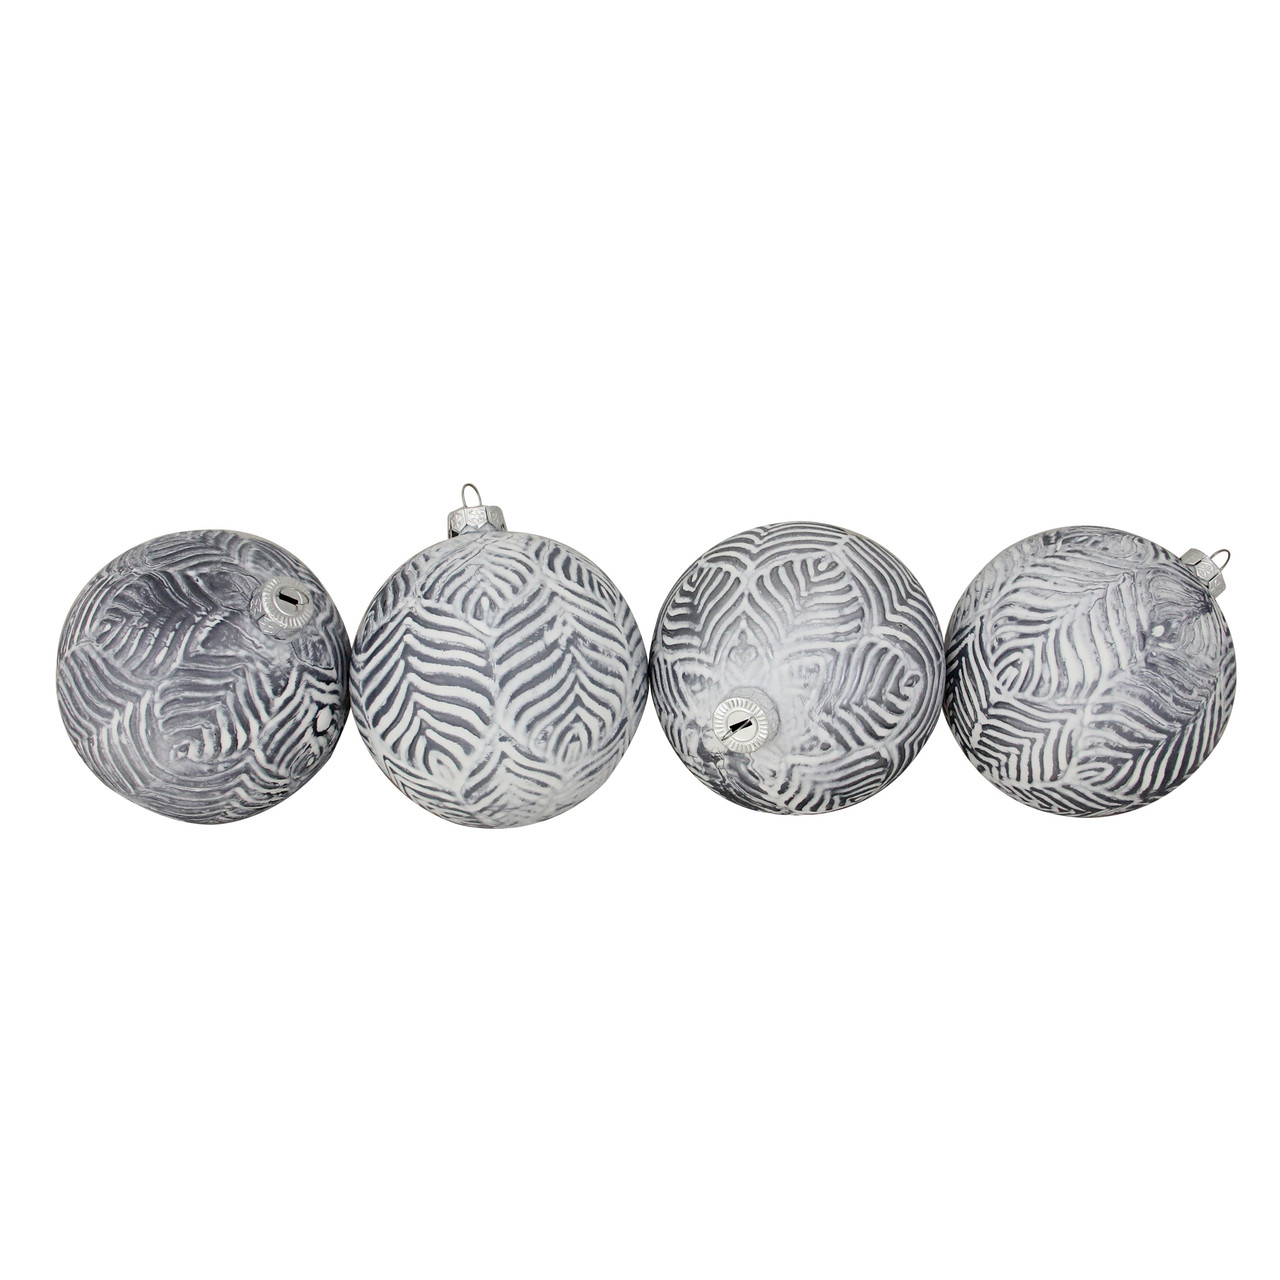 4 Shiny Silver Mirrored Glitter Snowflakes Ball Ornament